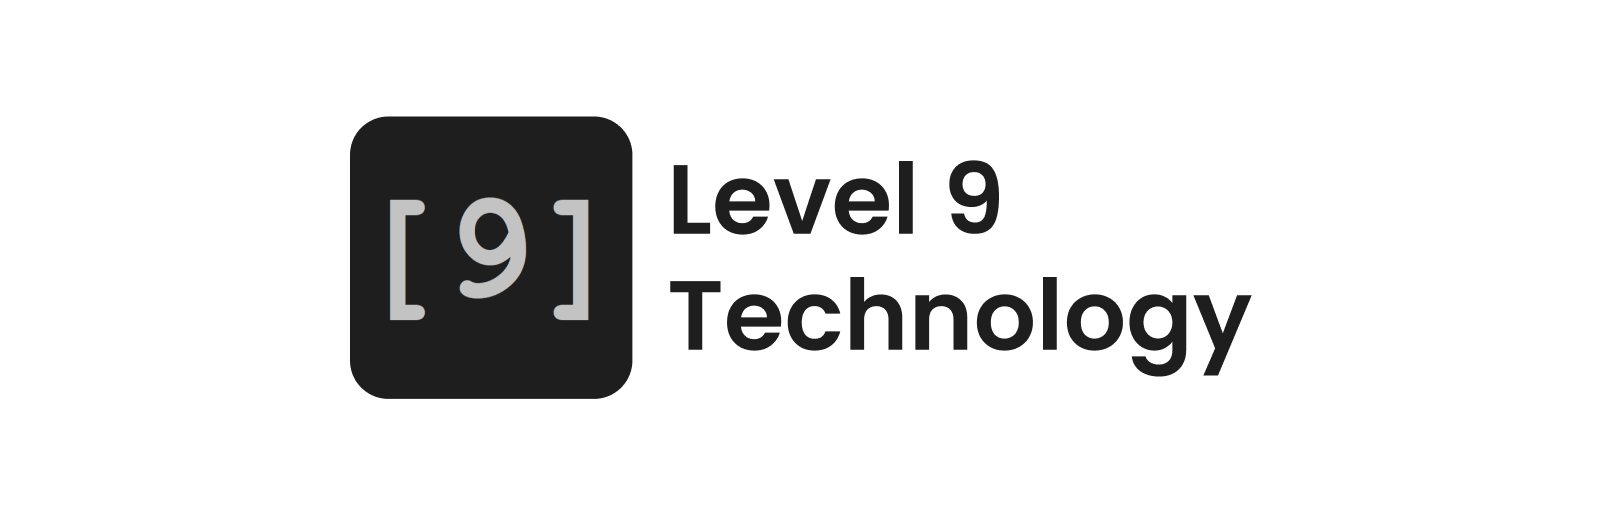 Level 9 Technology